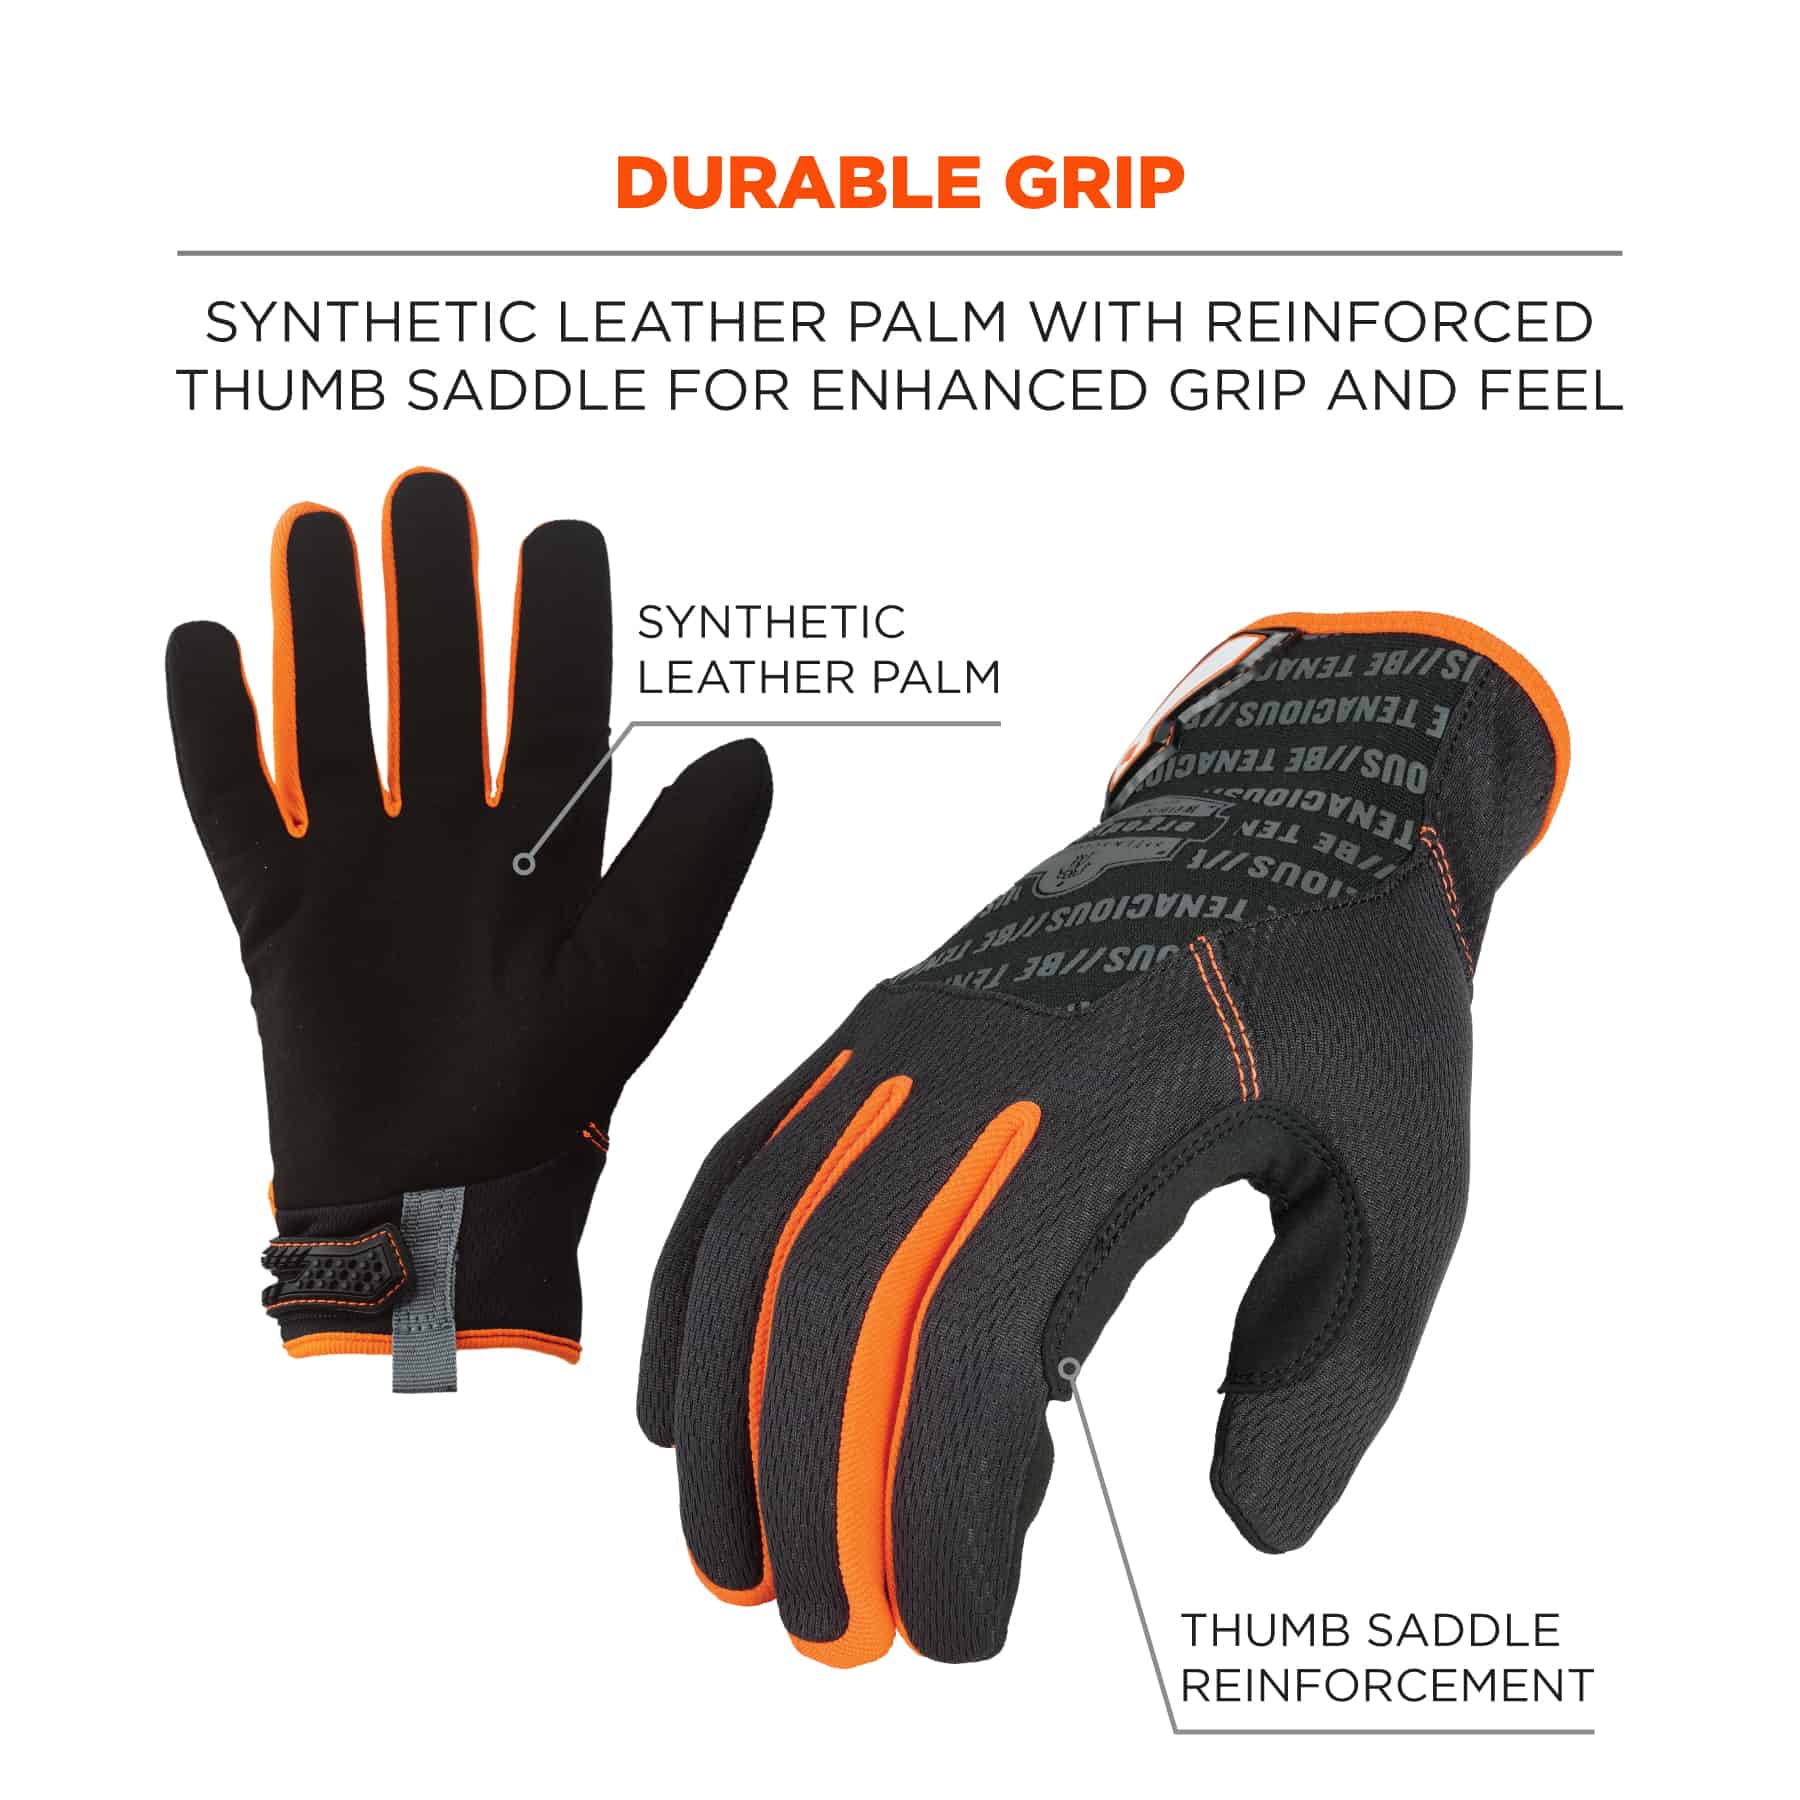 https://www.ergodyne.com/sites/default/files/product-images/17172-812-standard-utility-gloves-black-durable-grip.jpg